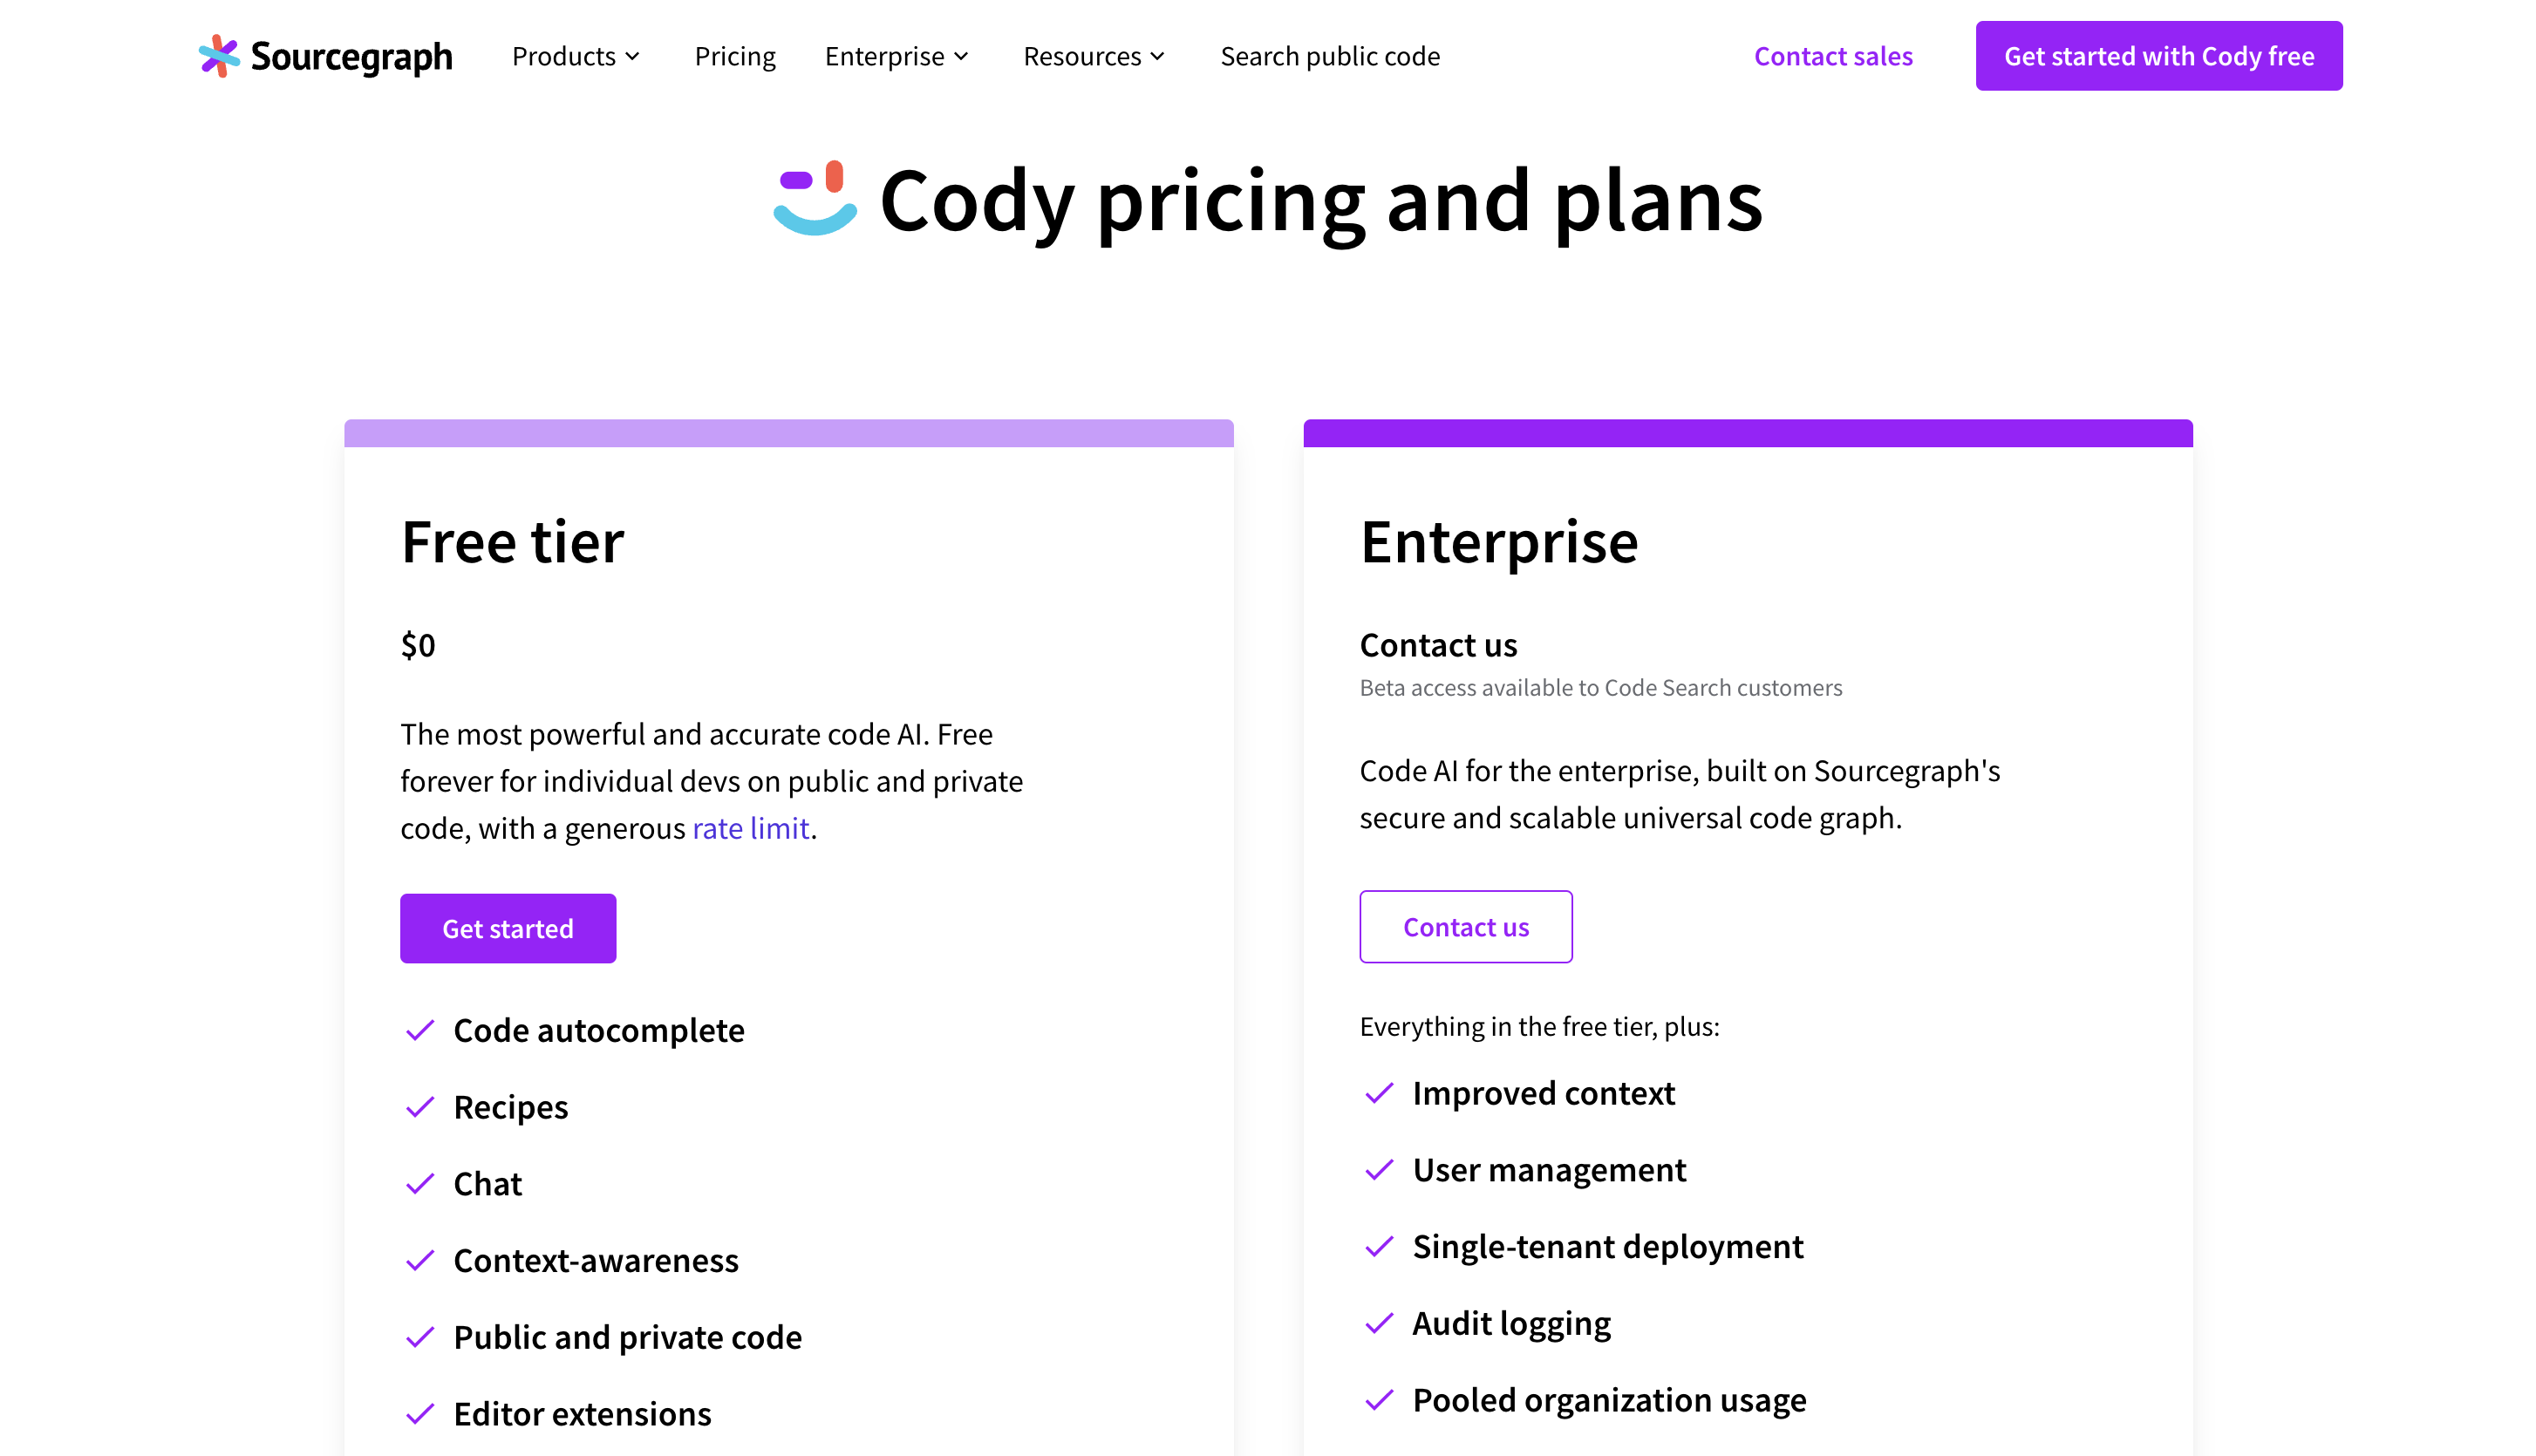 Cody Pricing